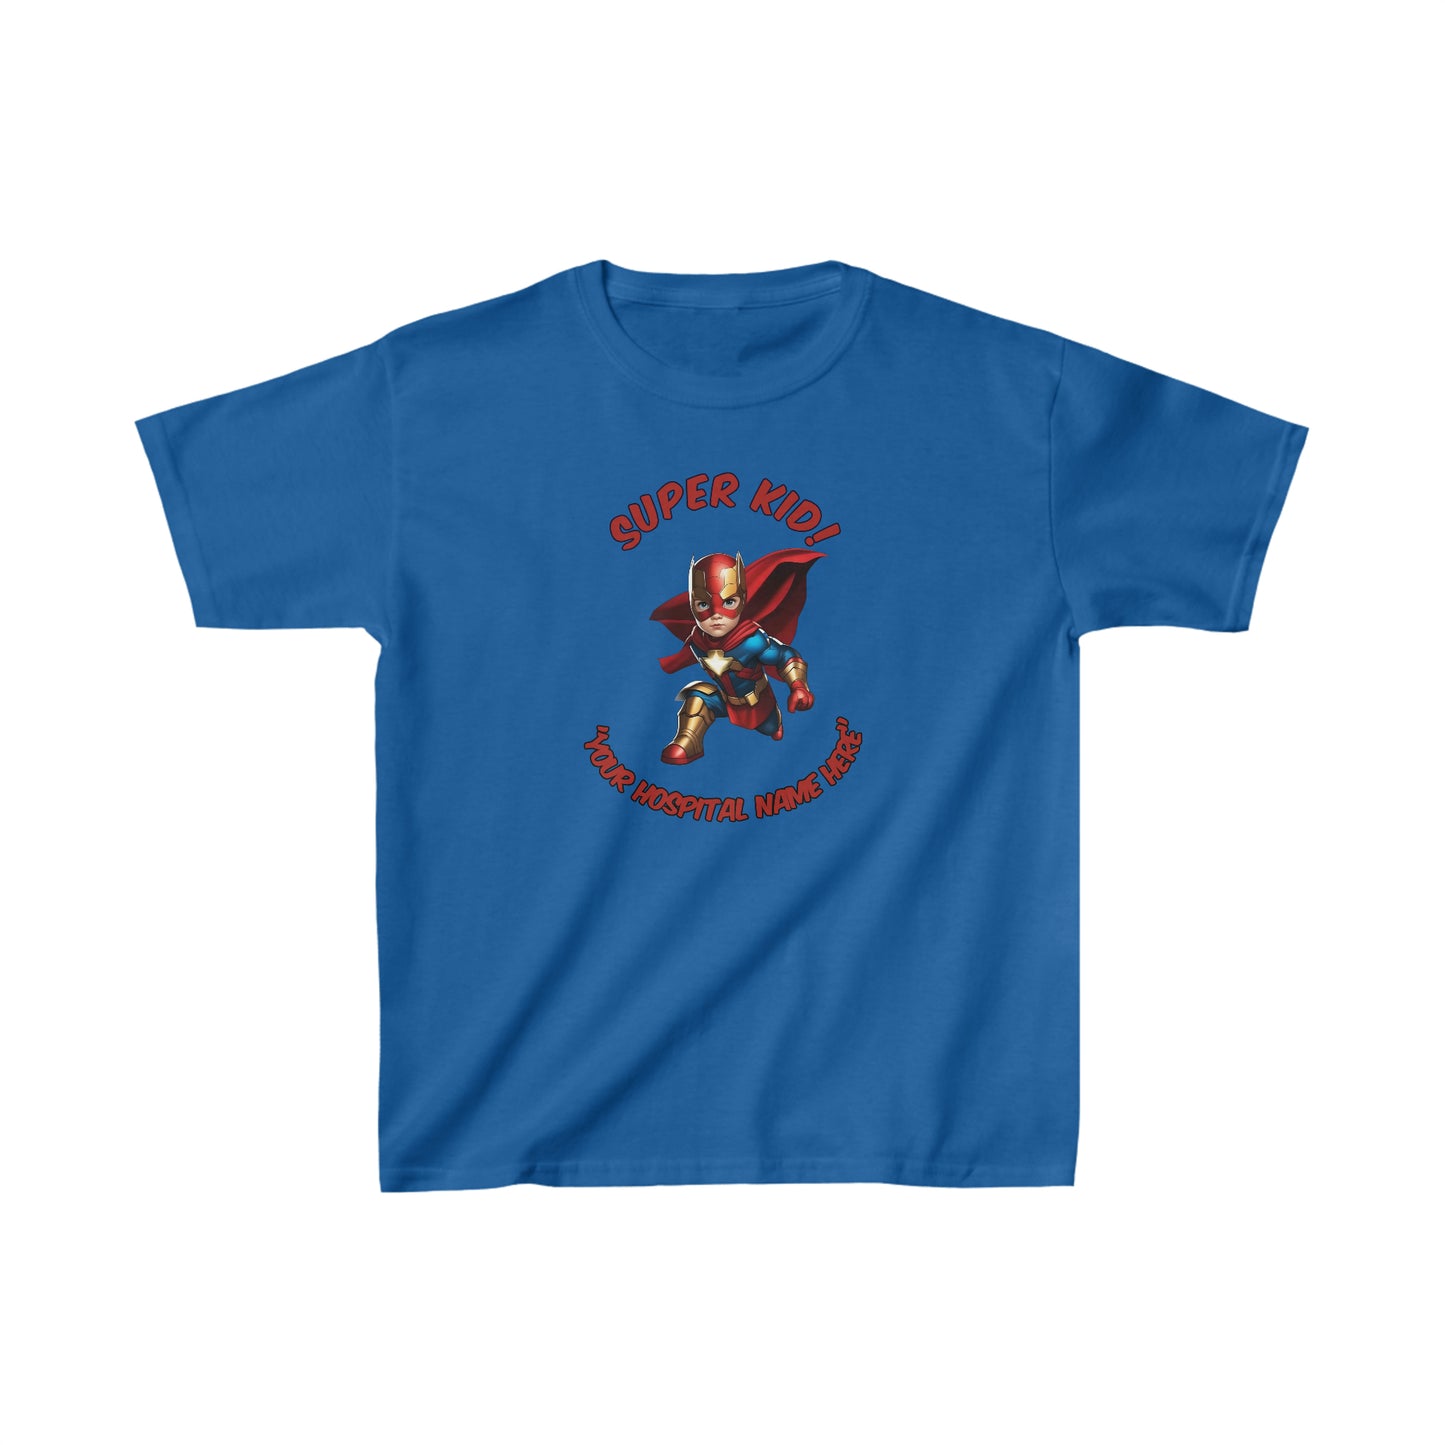 24 Pack Custom Hero Tee Shirt for Hospitals! Kids XL Blue $478.90